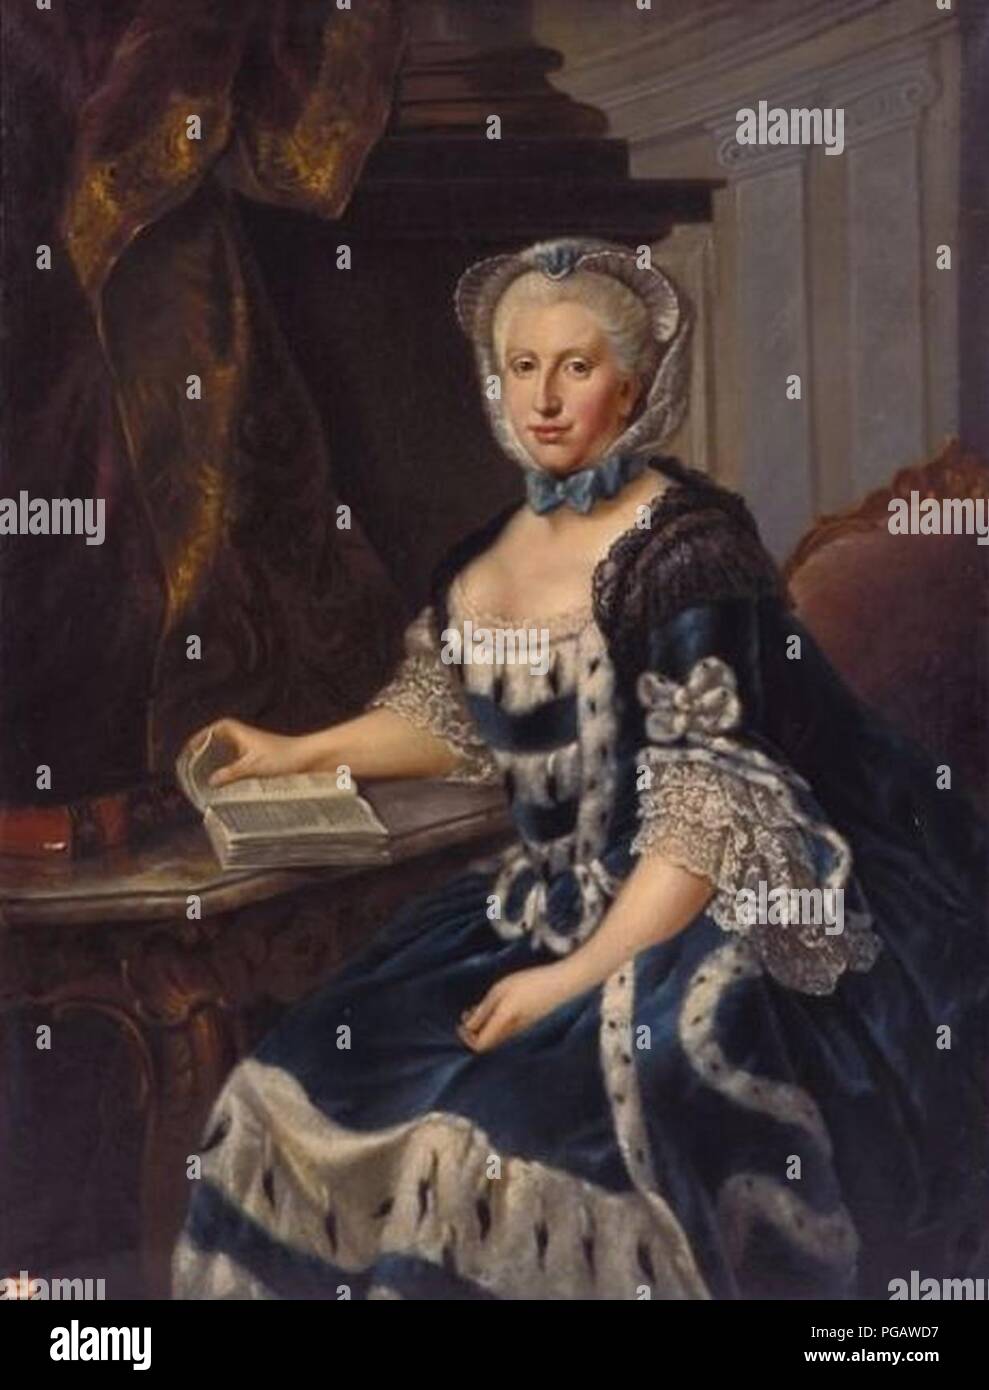 Augusta of Great Britain, duchess of Brunswick-Wolfenbüttel. Stock Photo